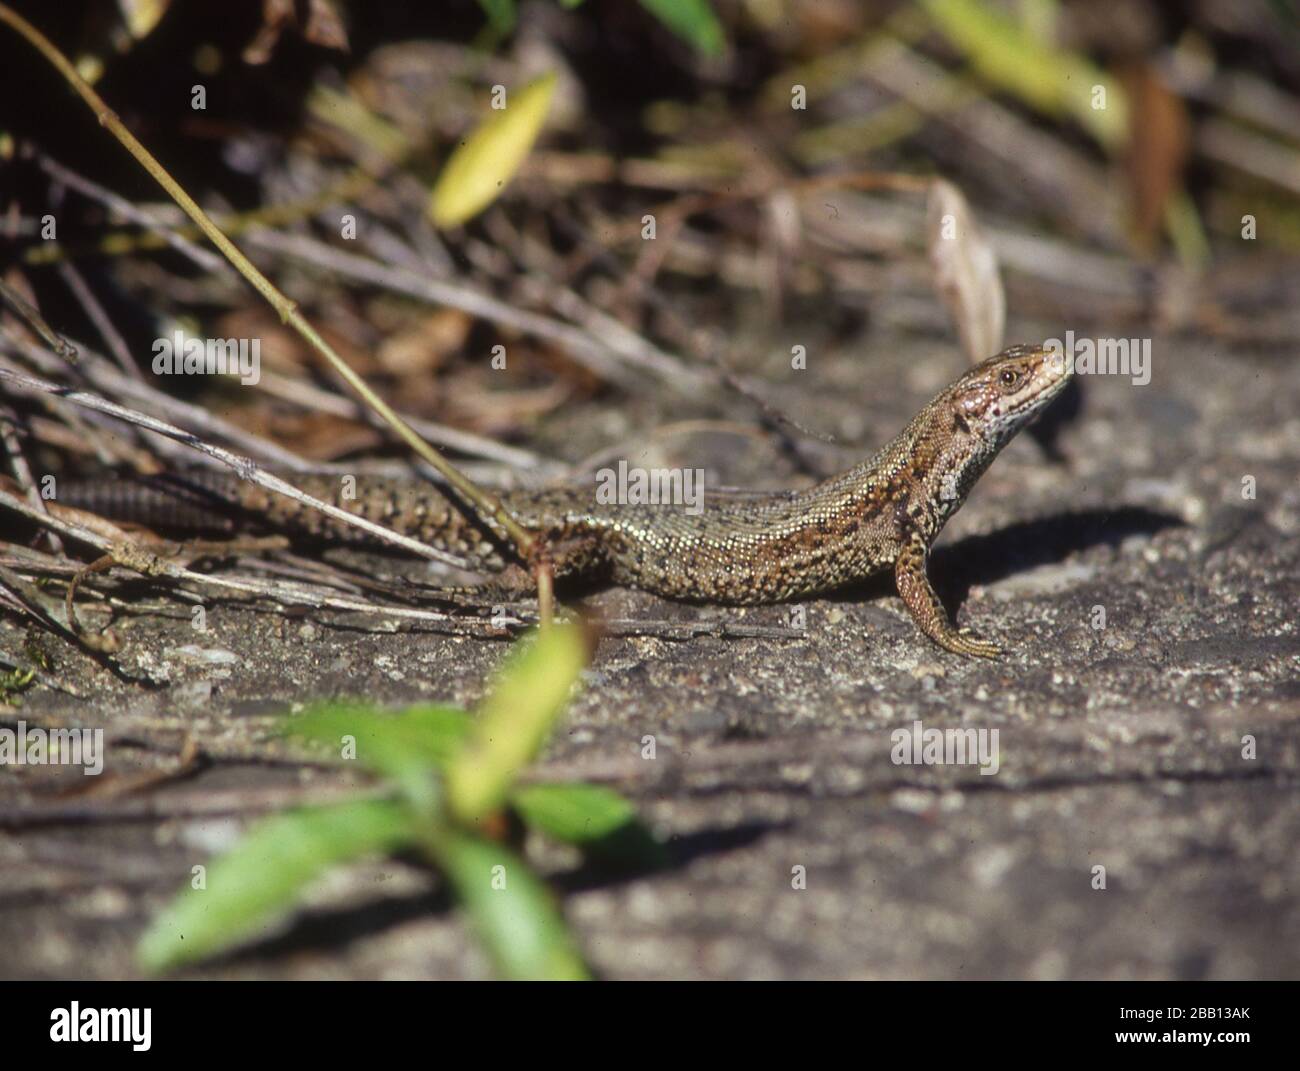 Lizard basks in the grass Stock Photo